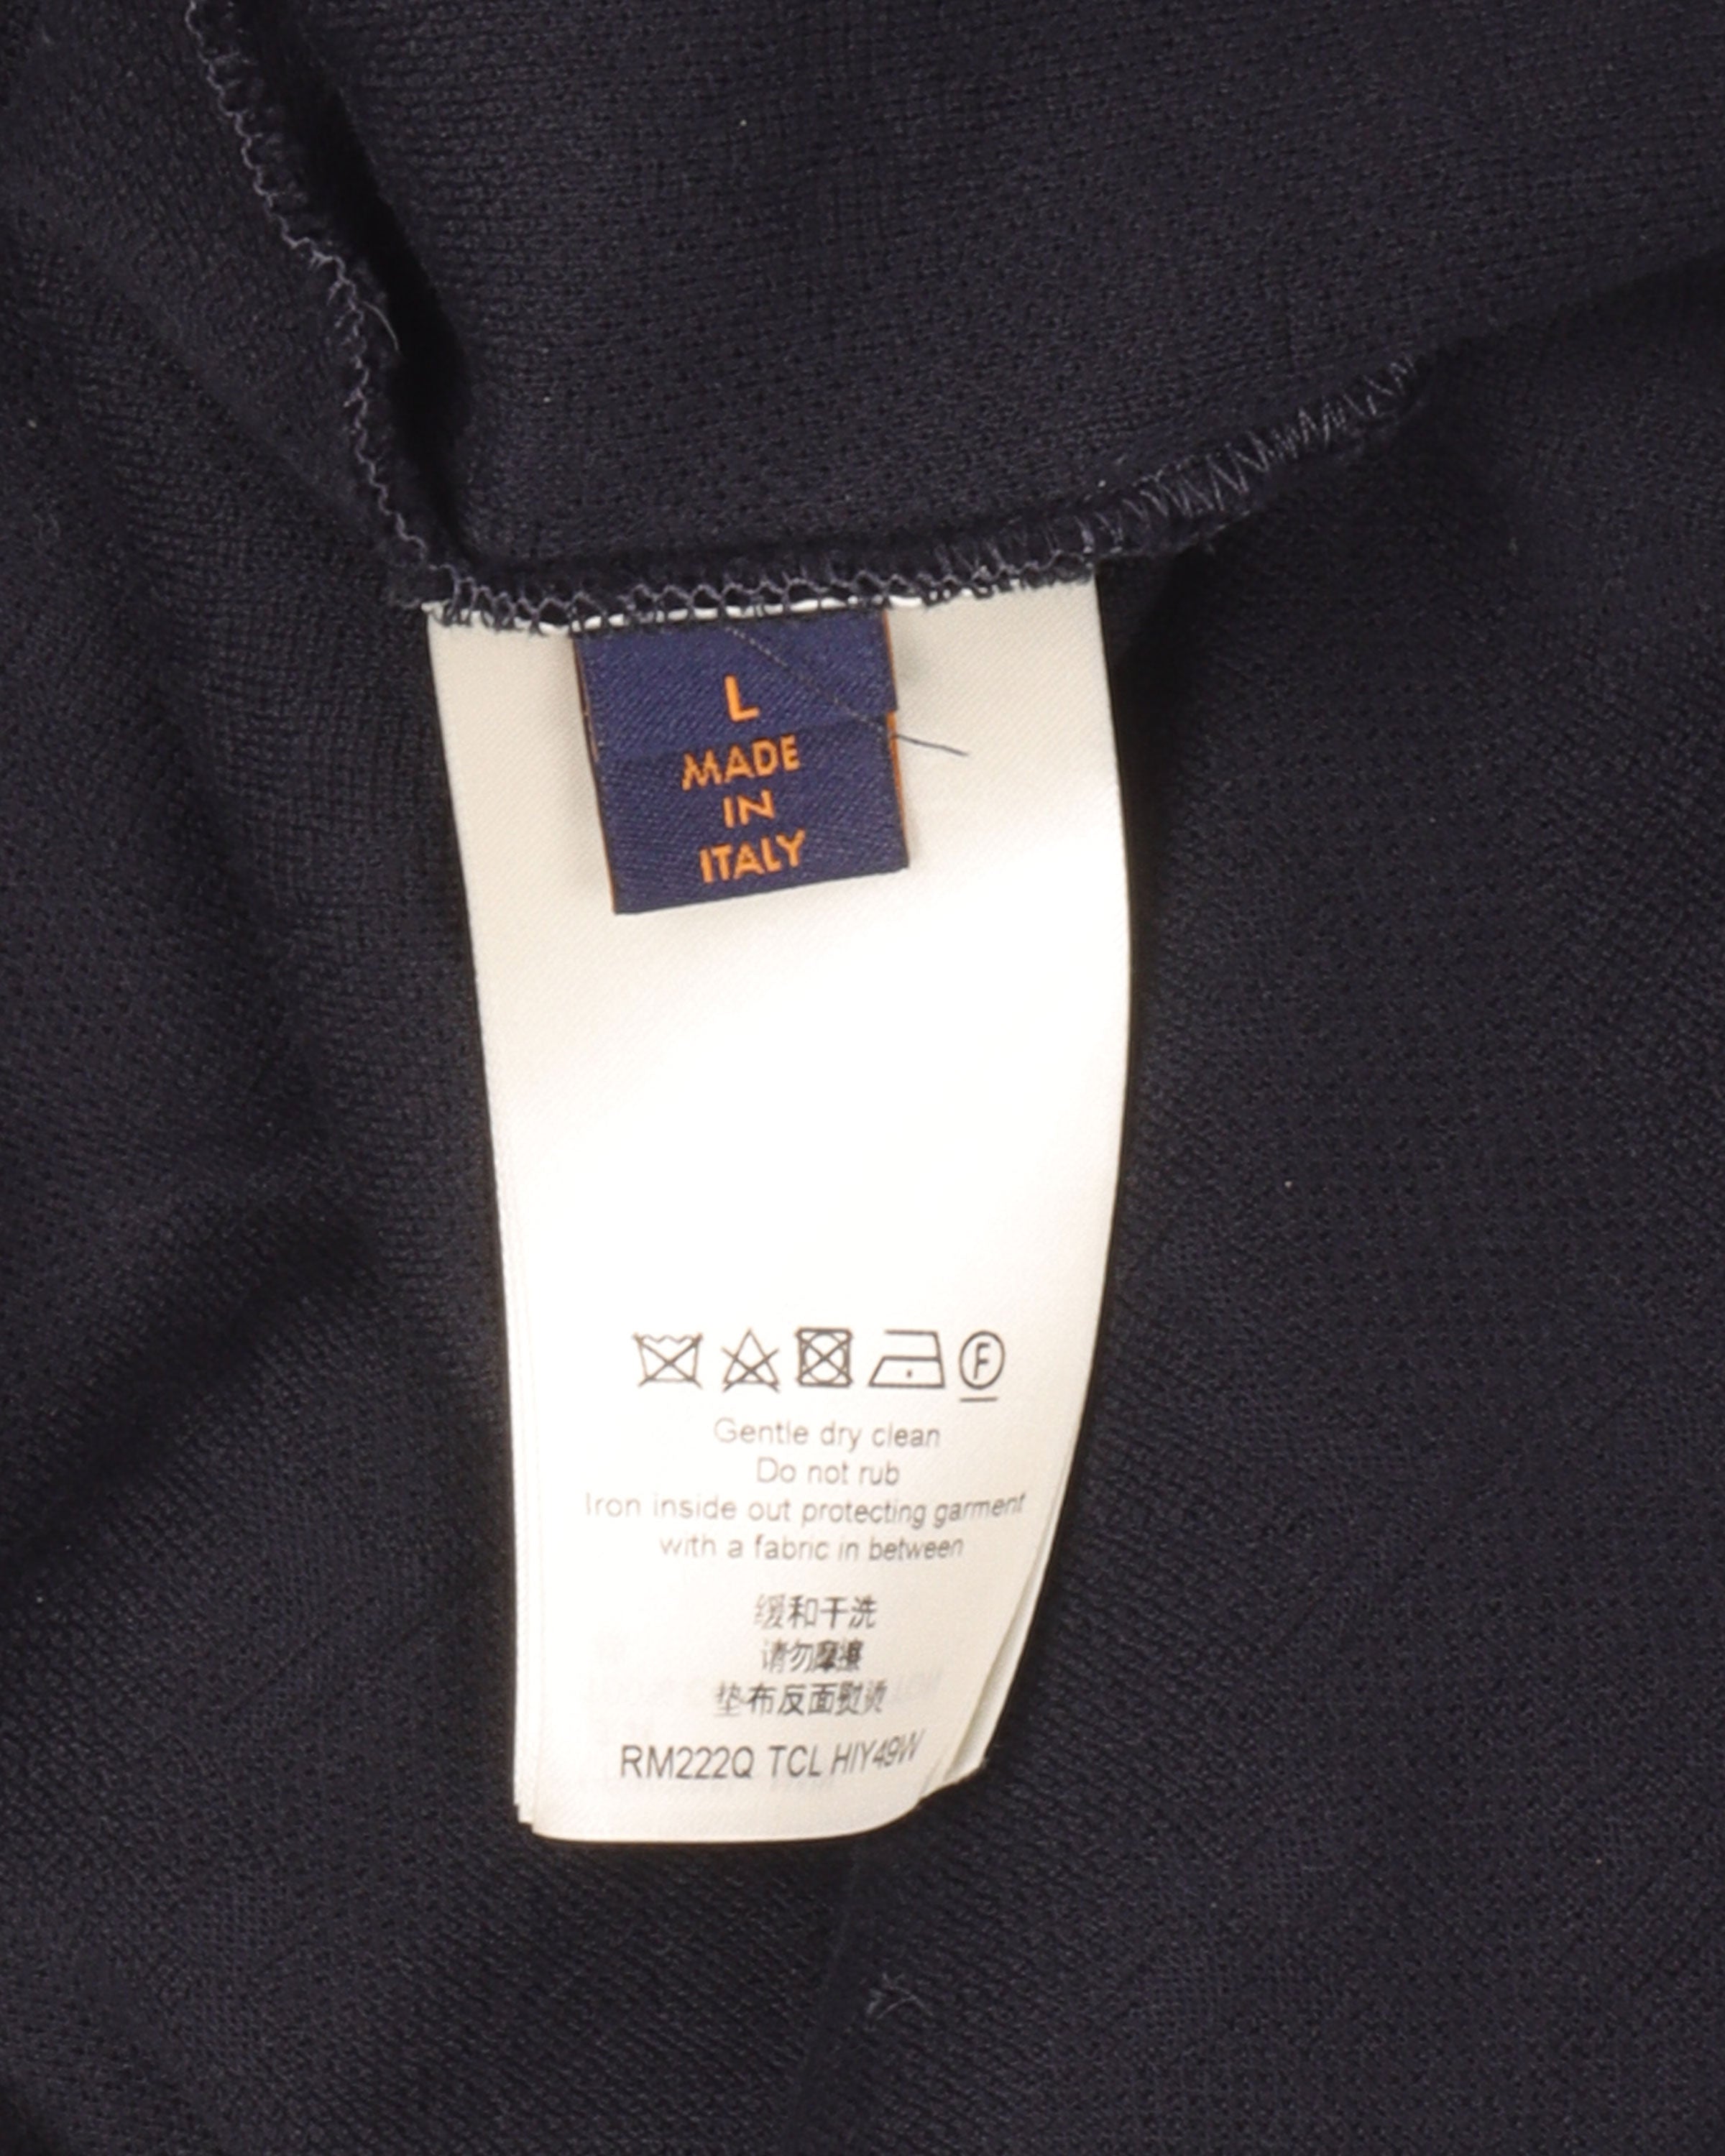 Louis Vuitton Monogram Pocket Knit T-Shirt -   Vuitton+Monogram+Pocket+Knit+T-Shirt : r/zealreplica